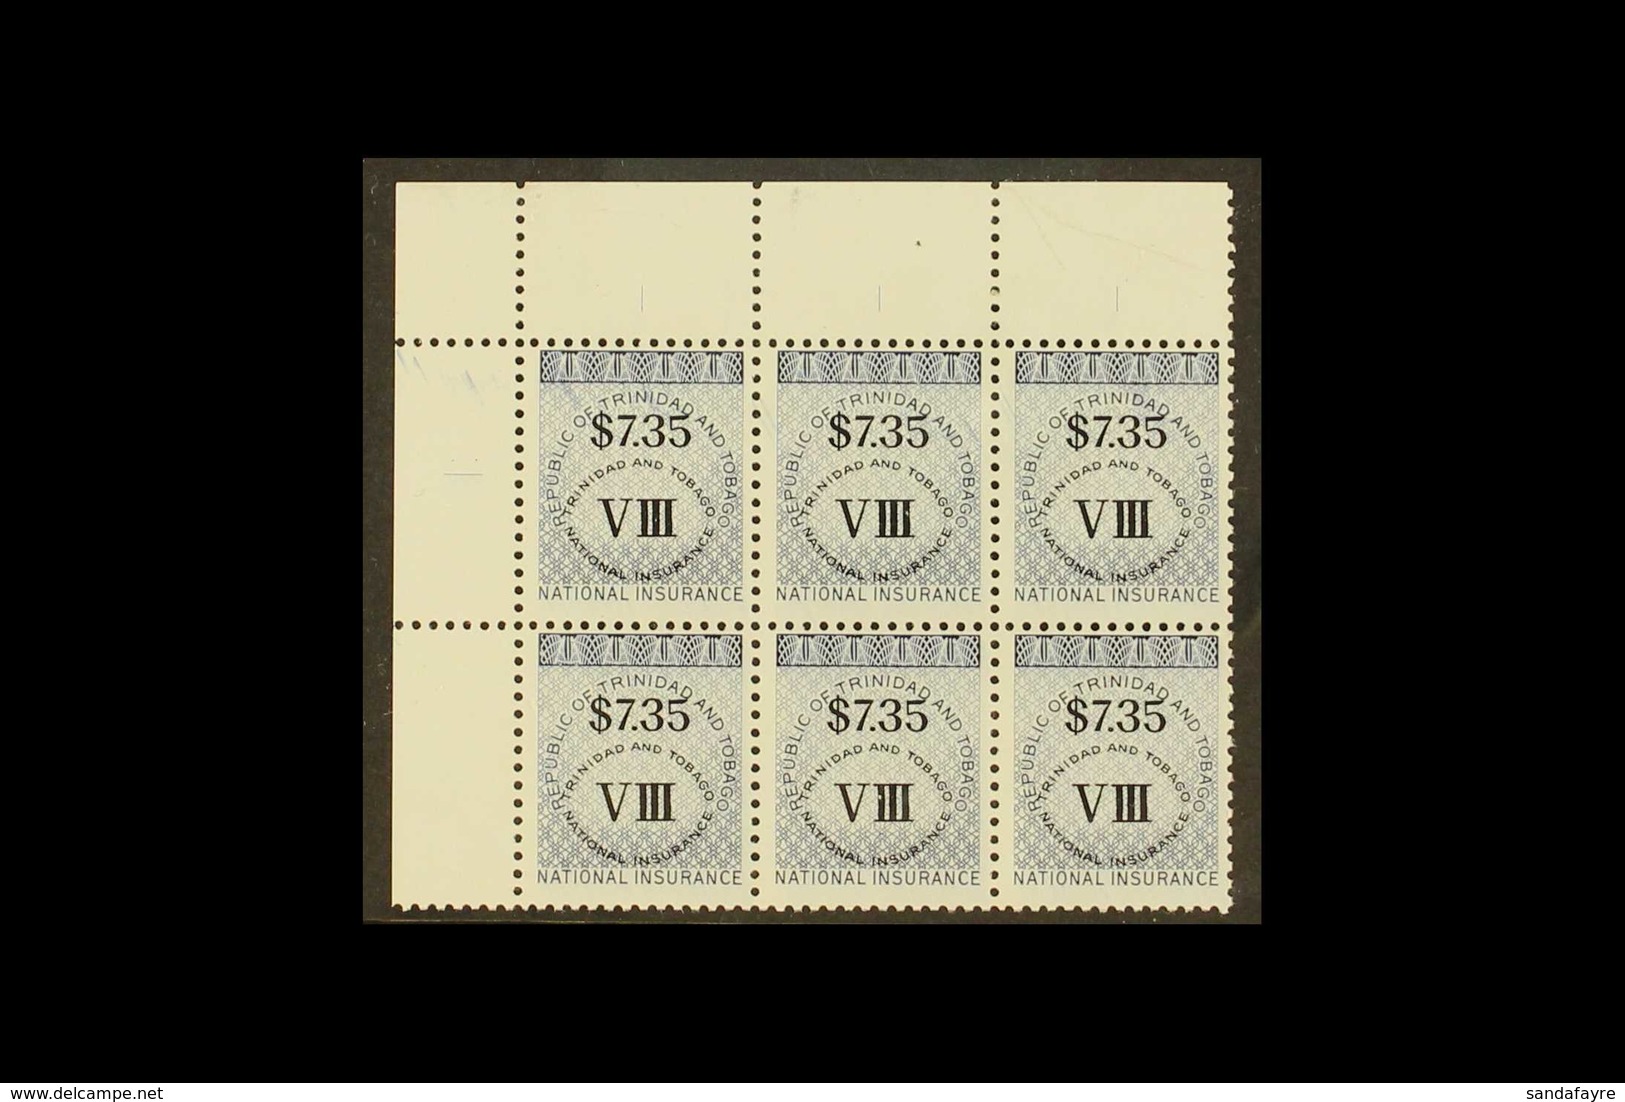 REVENUES NATIONAL INSURANCE 1990 $7.35 Dark Blue, Class VIII, Corner Marginal Block Of 6, Barefoot 14, Never Hinged Mint - Trindad & Tobago (...-1961)